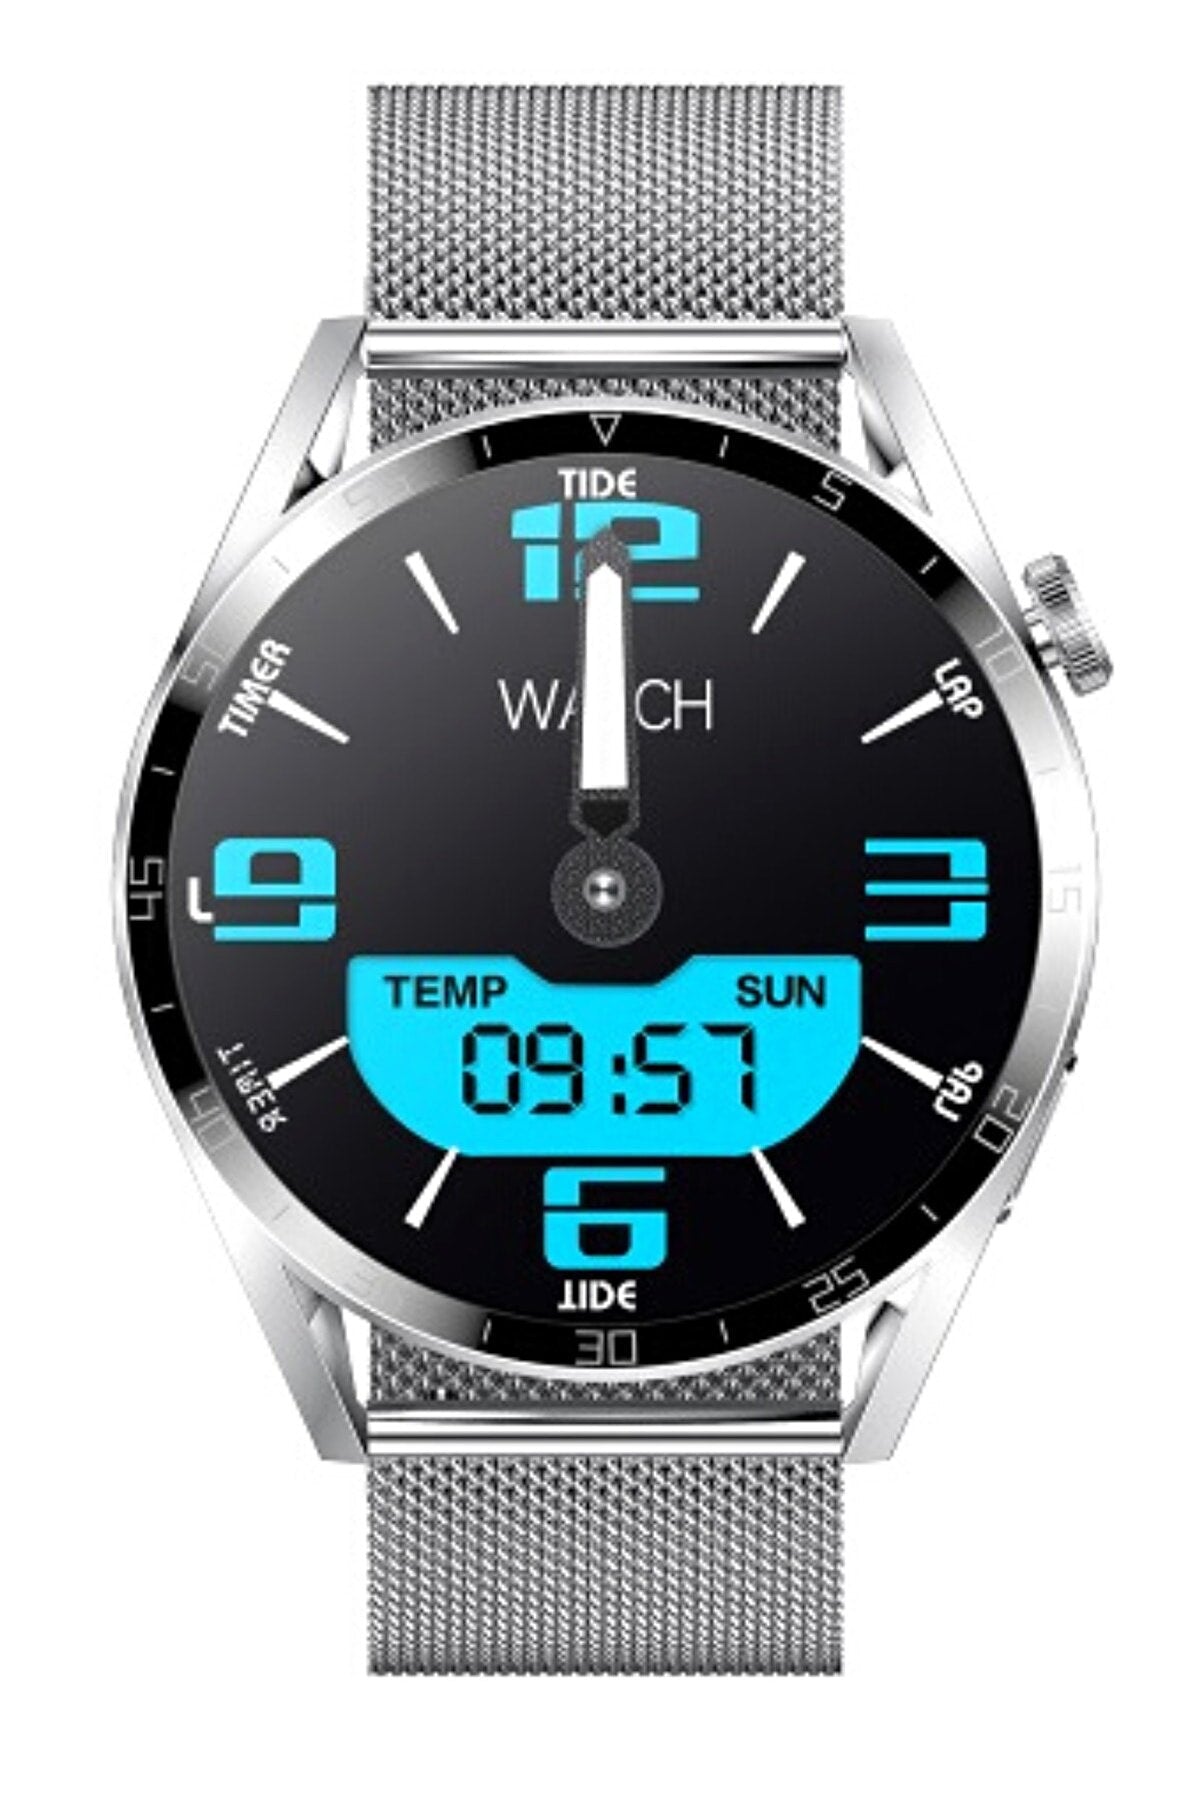 Ferro Watch - A Timepiece inspired by Porsche Tachometers. by Nil —  Kickstarter